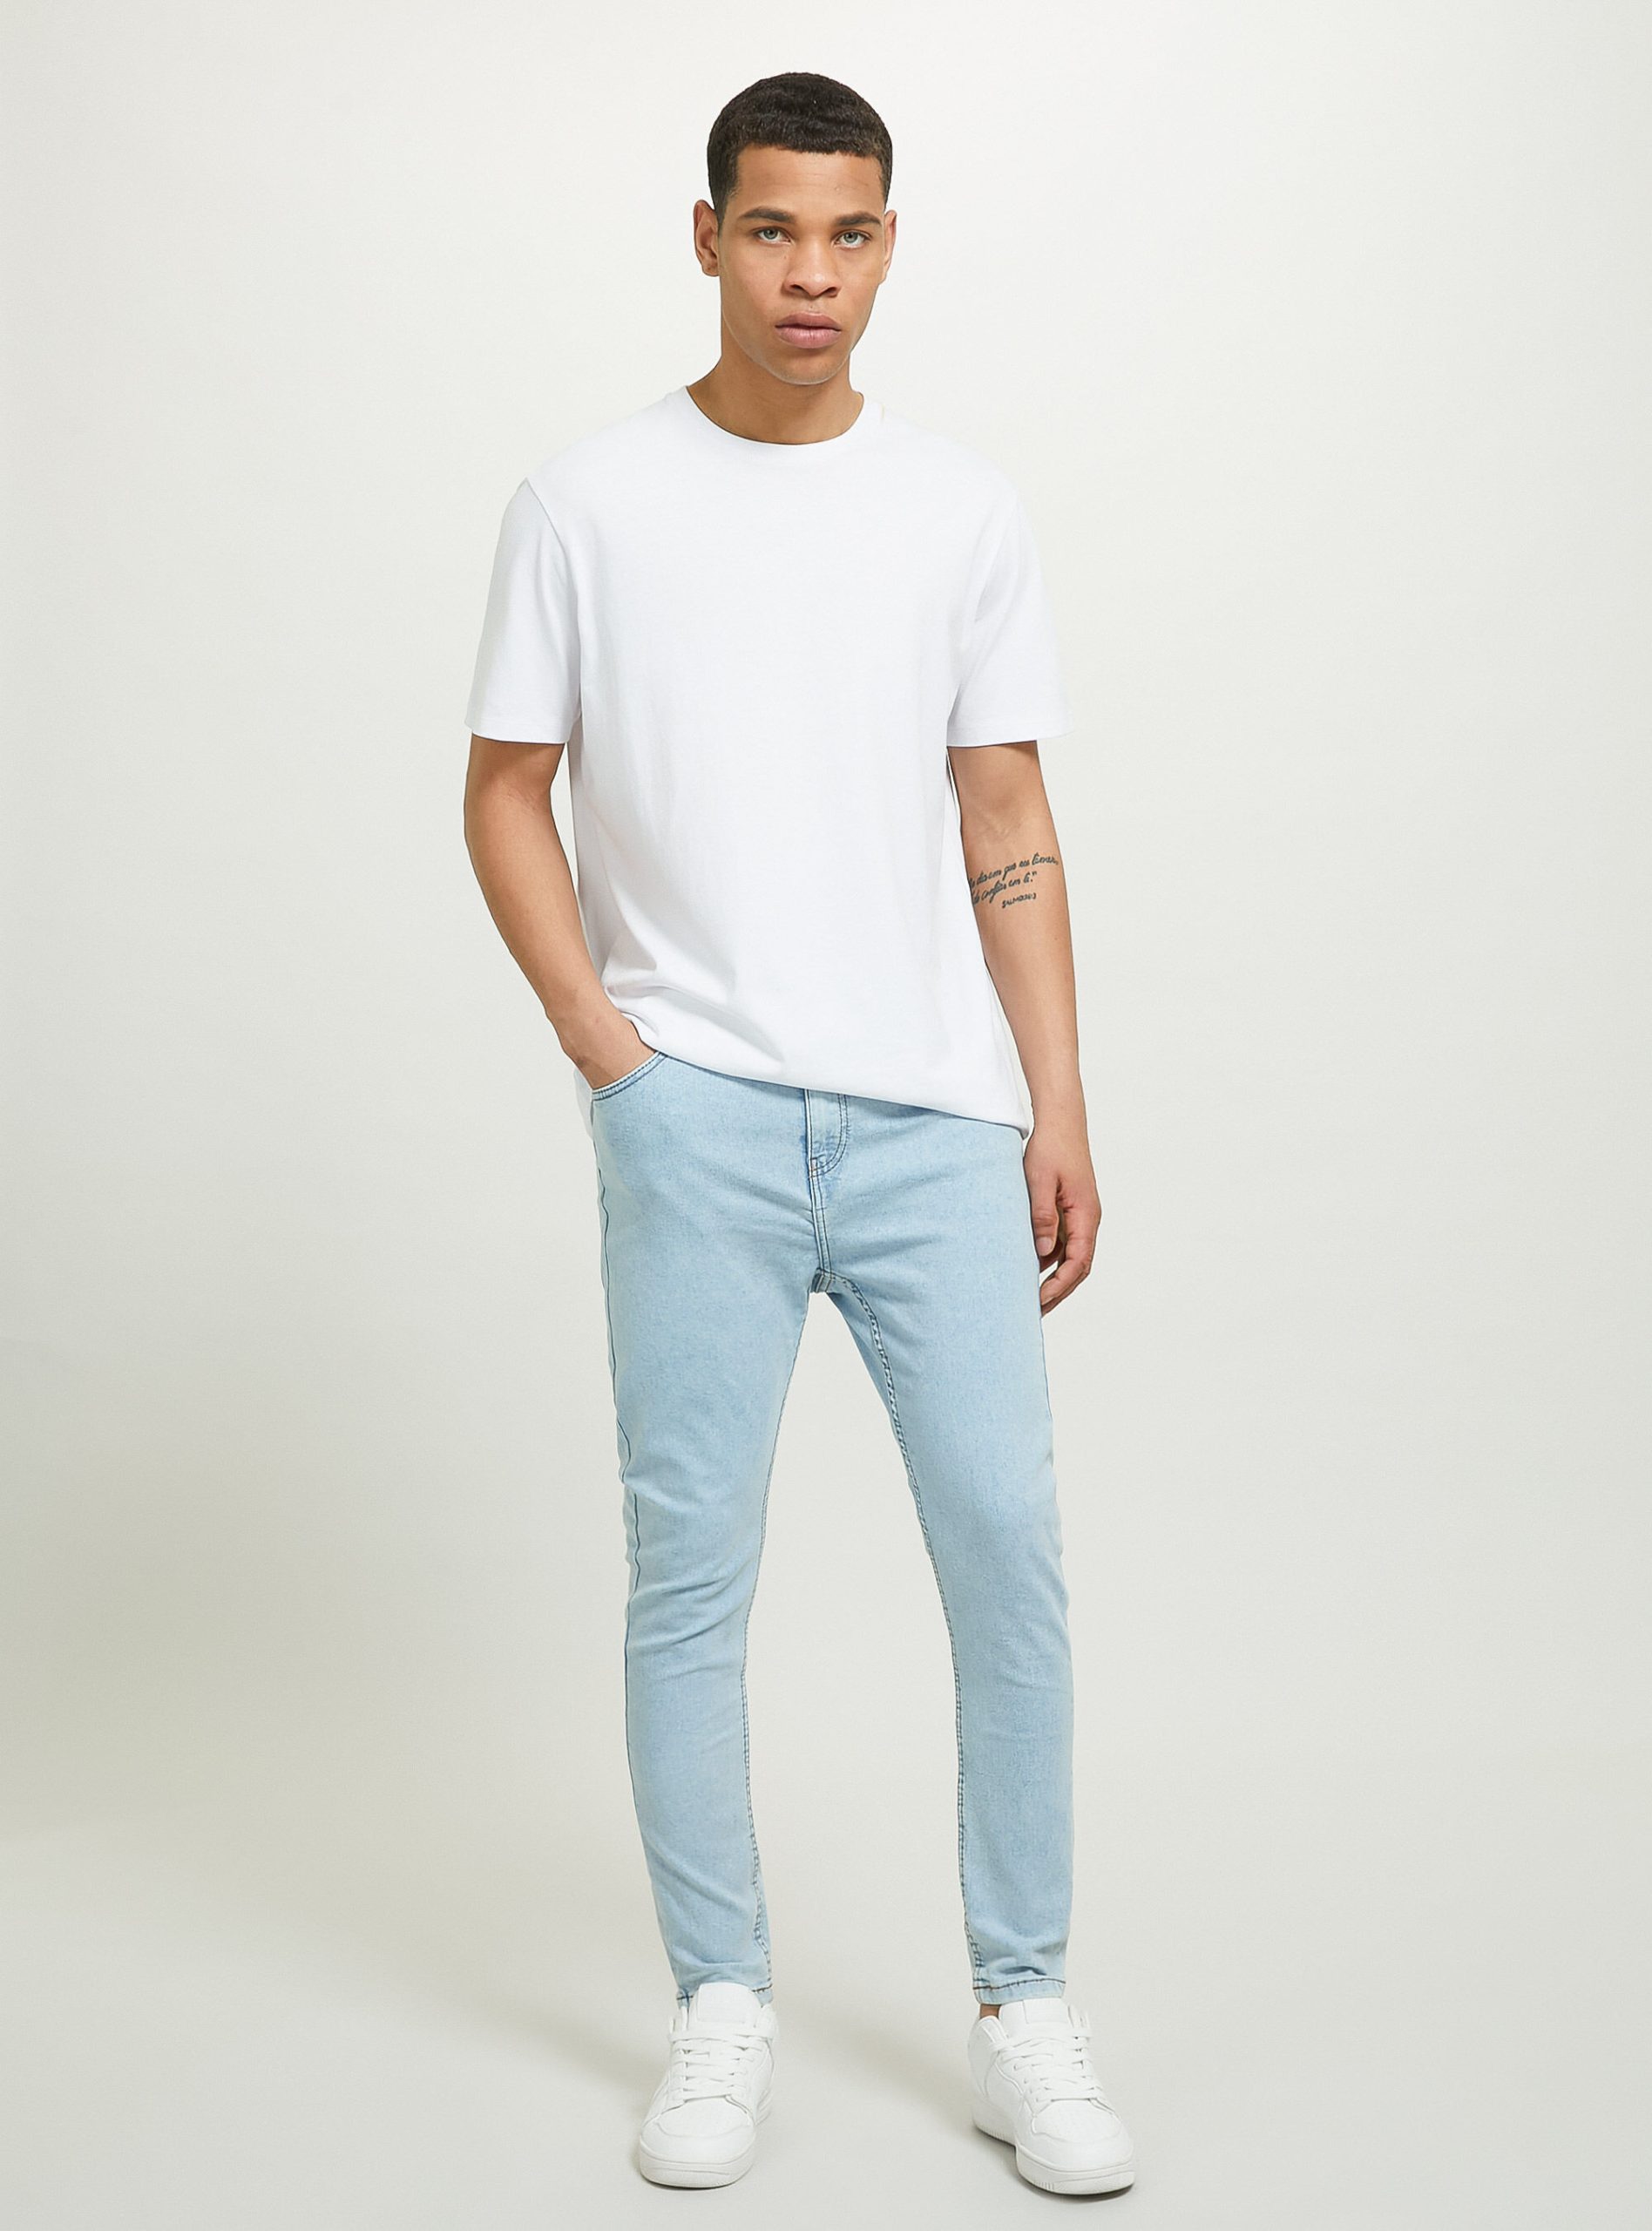 D007 Light Azure Jeans Super Skinny Fit Stretch Denim Jeans Kaufen Männer Alcott – 2